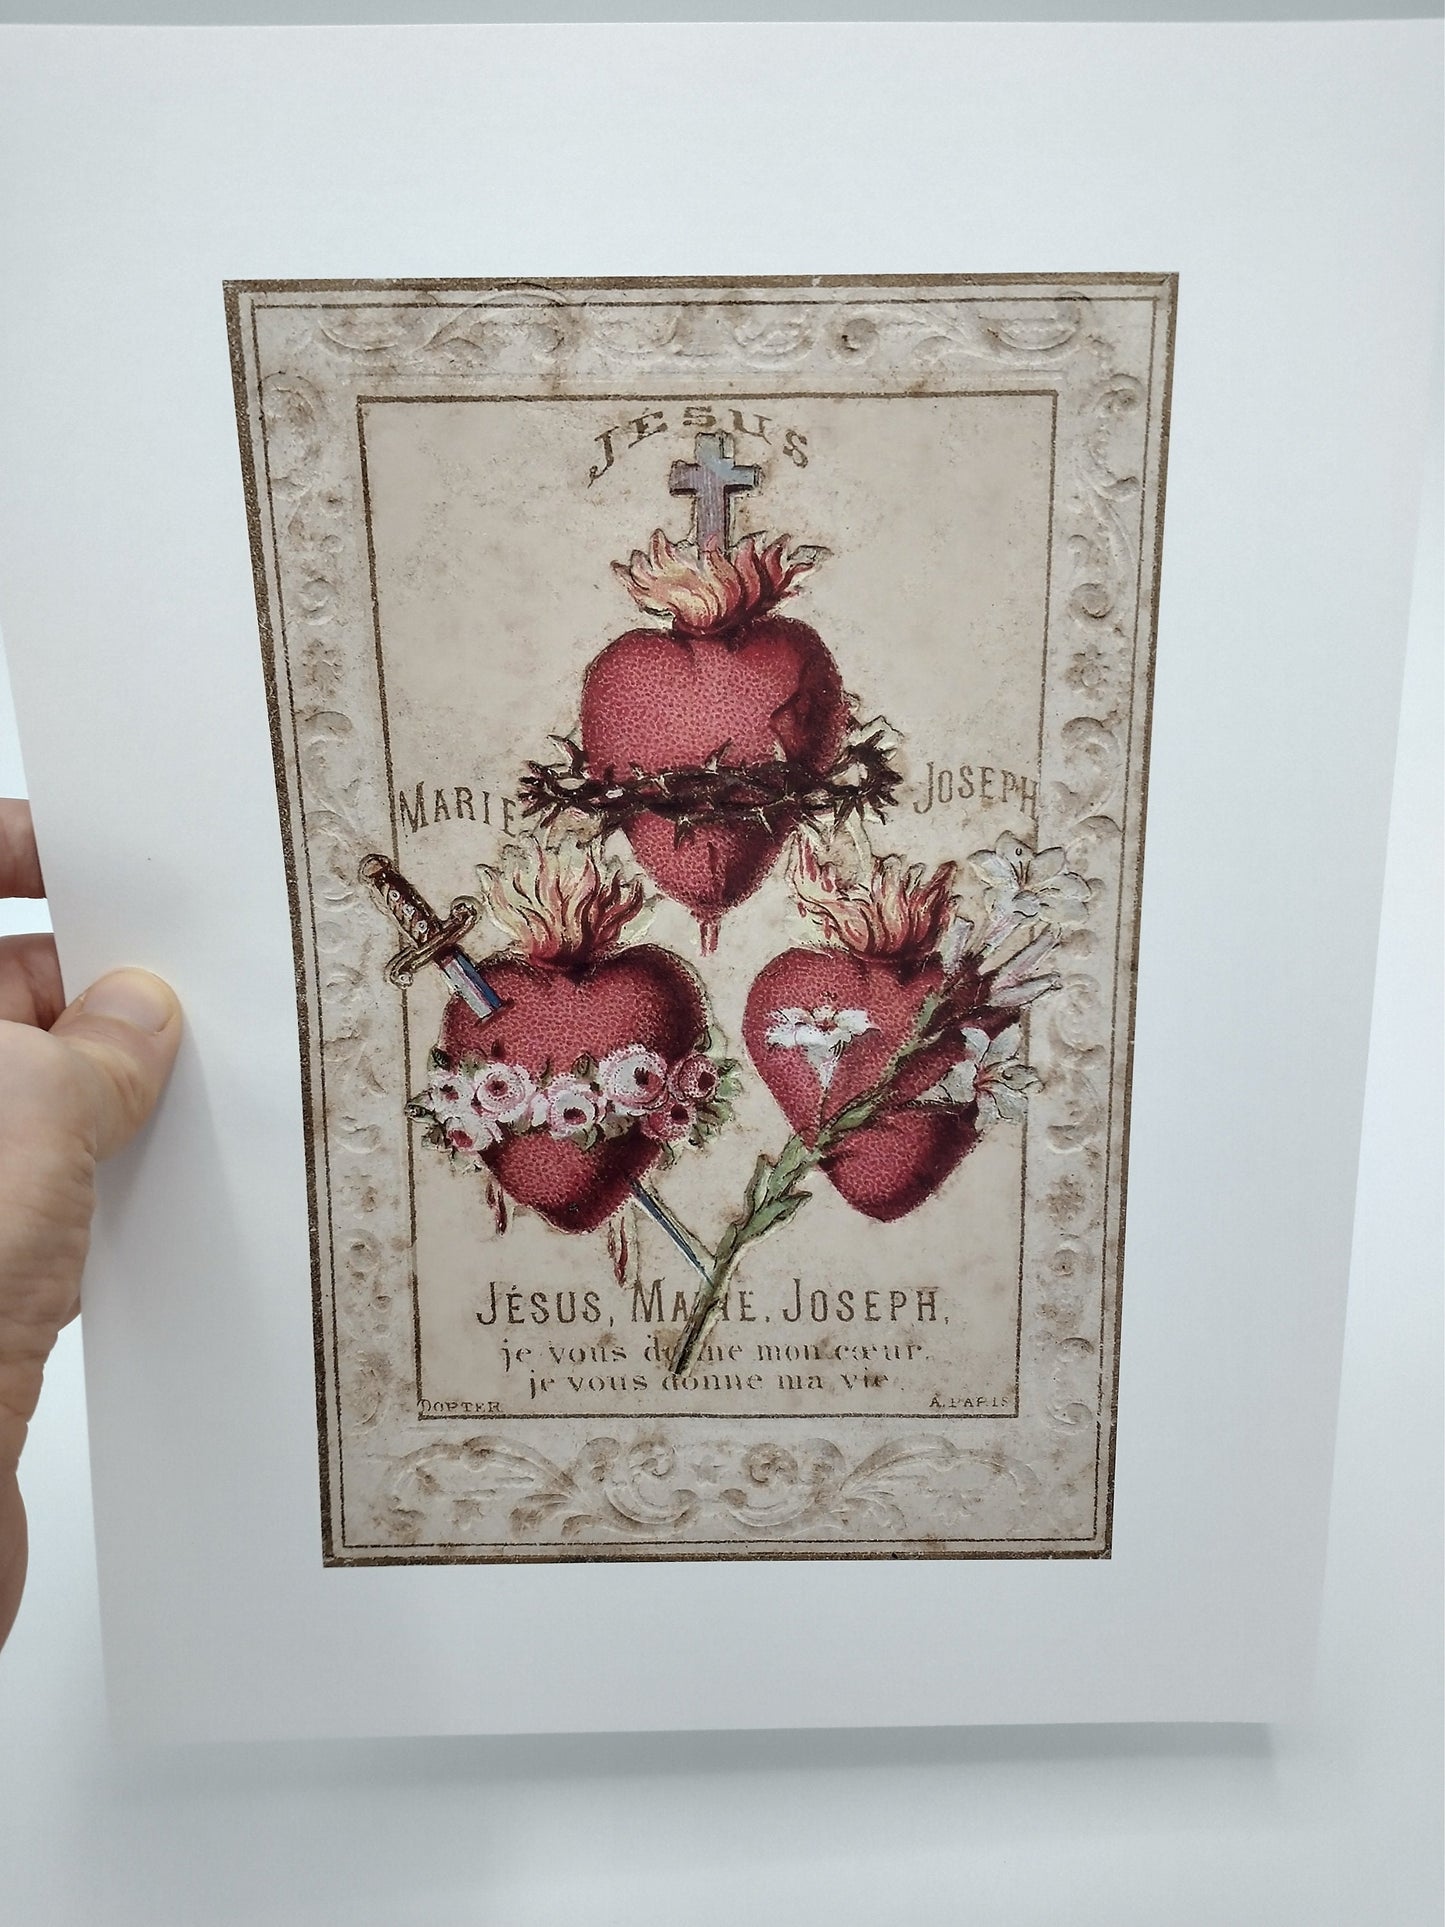 Infant of Prague – based on a Vintage Holy Card – Catholic Art Print